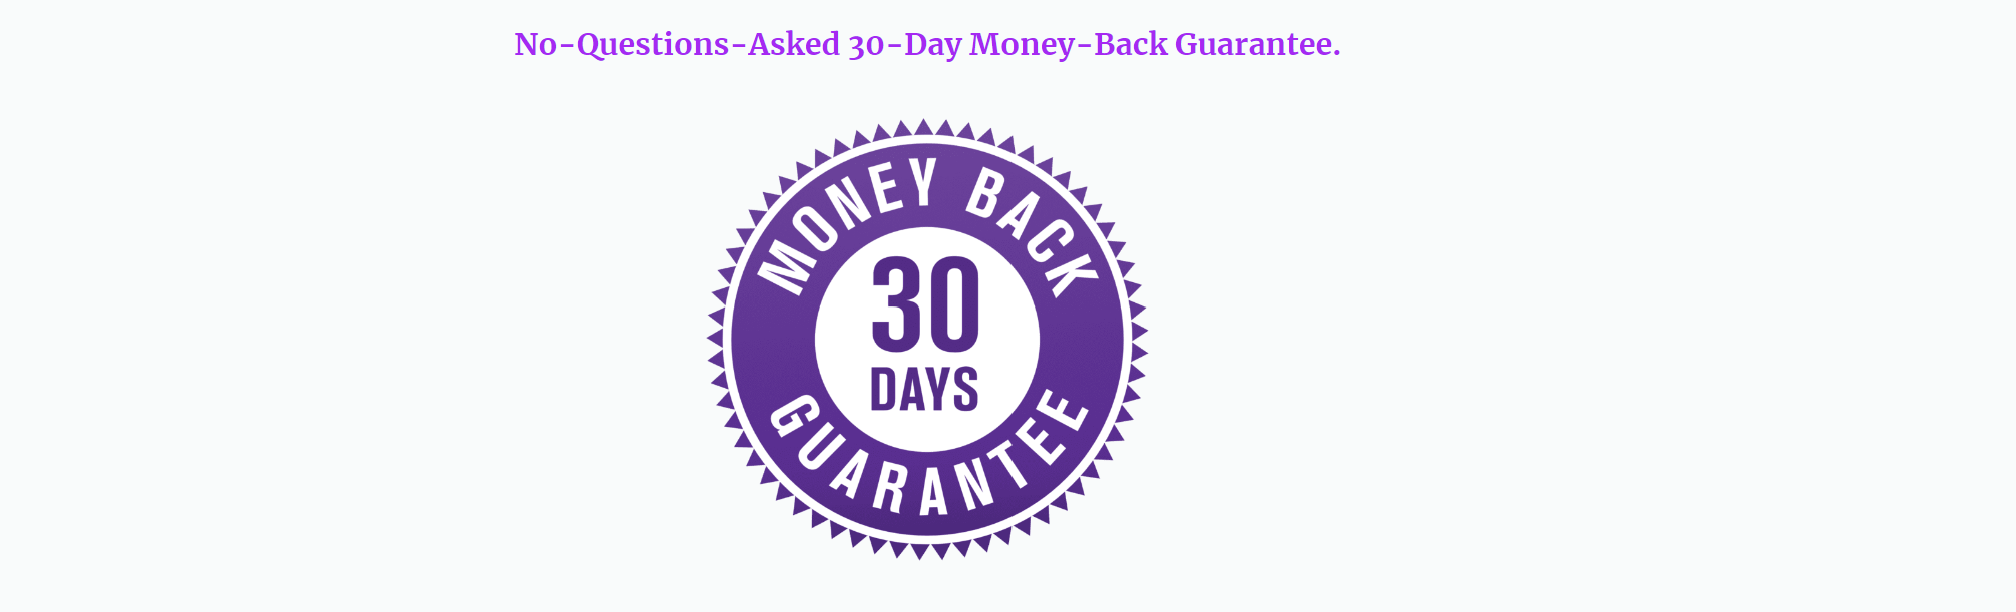 Garanție de returnare a banilor 30 zile